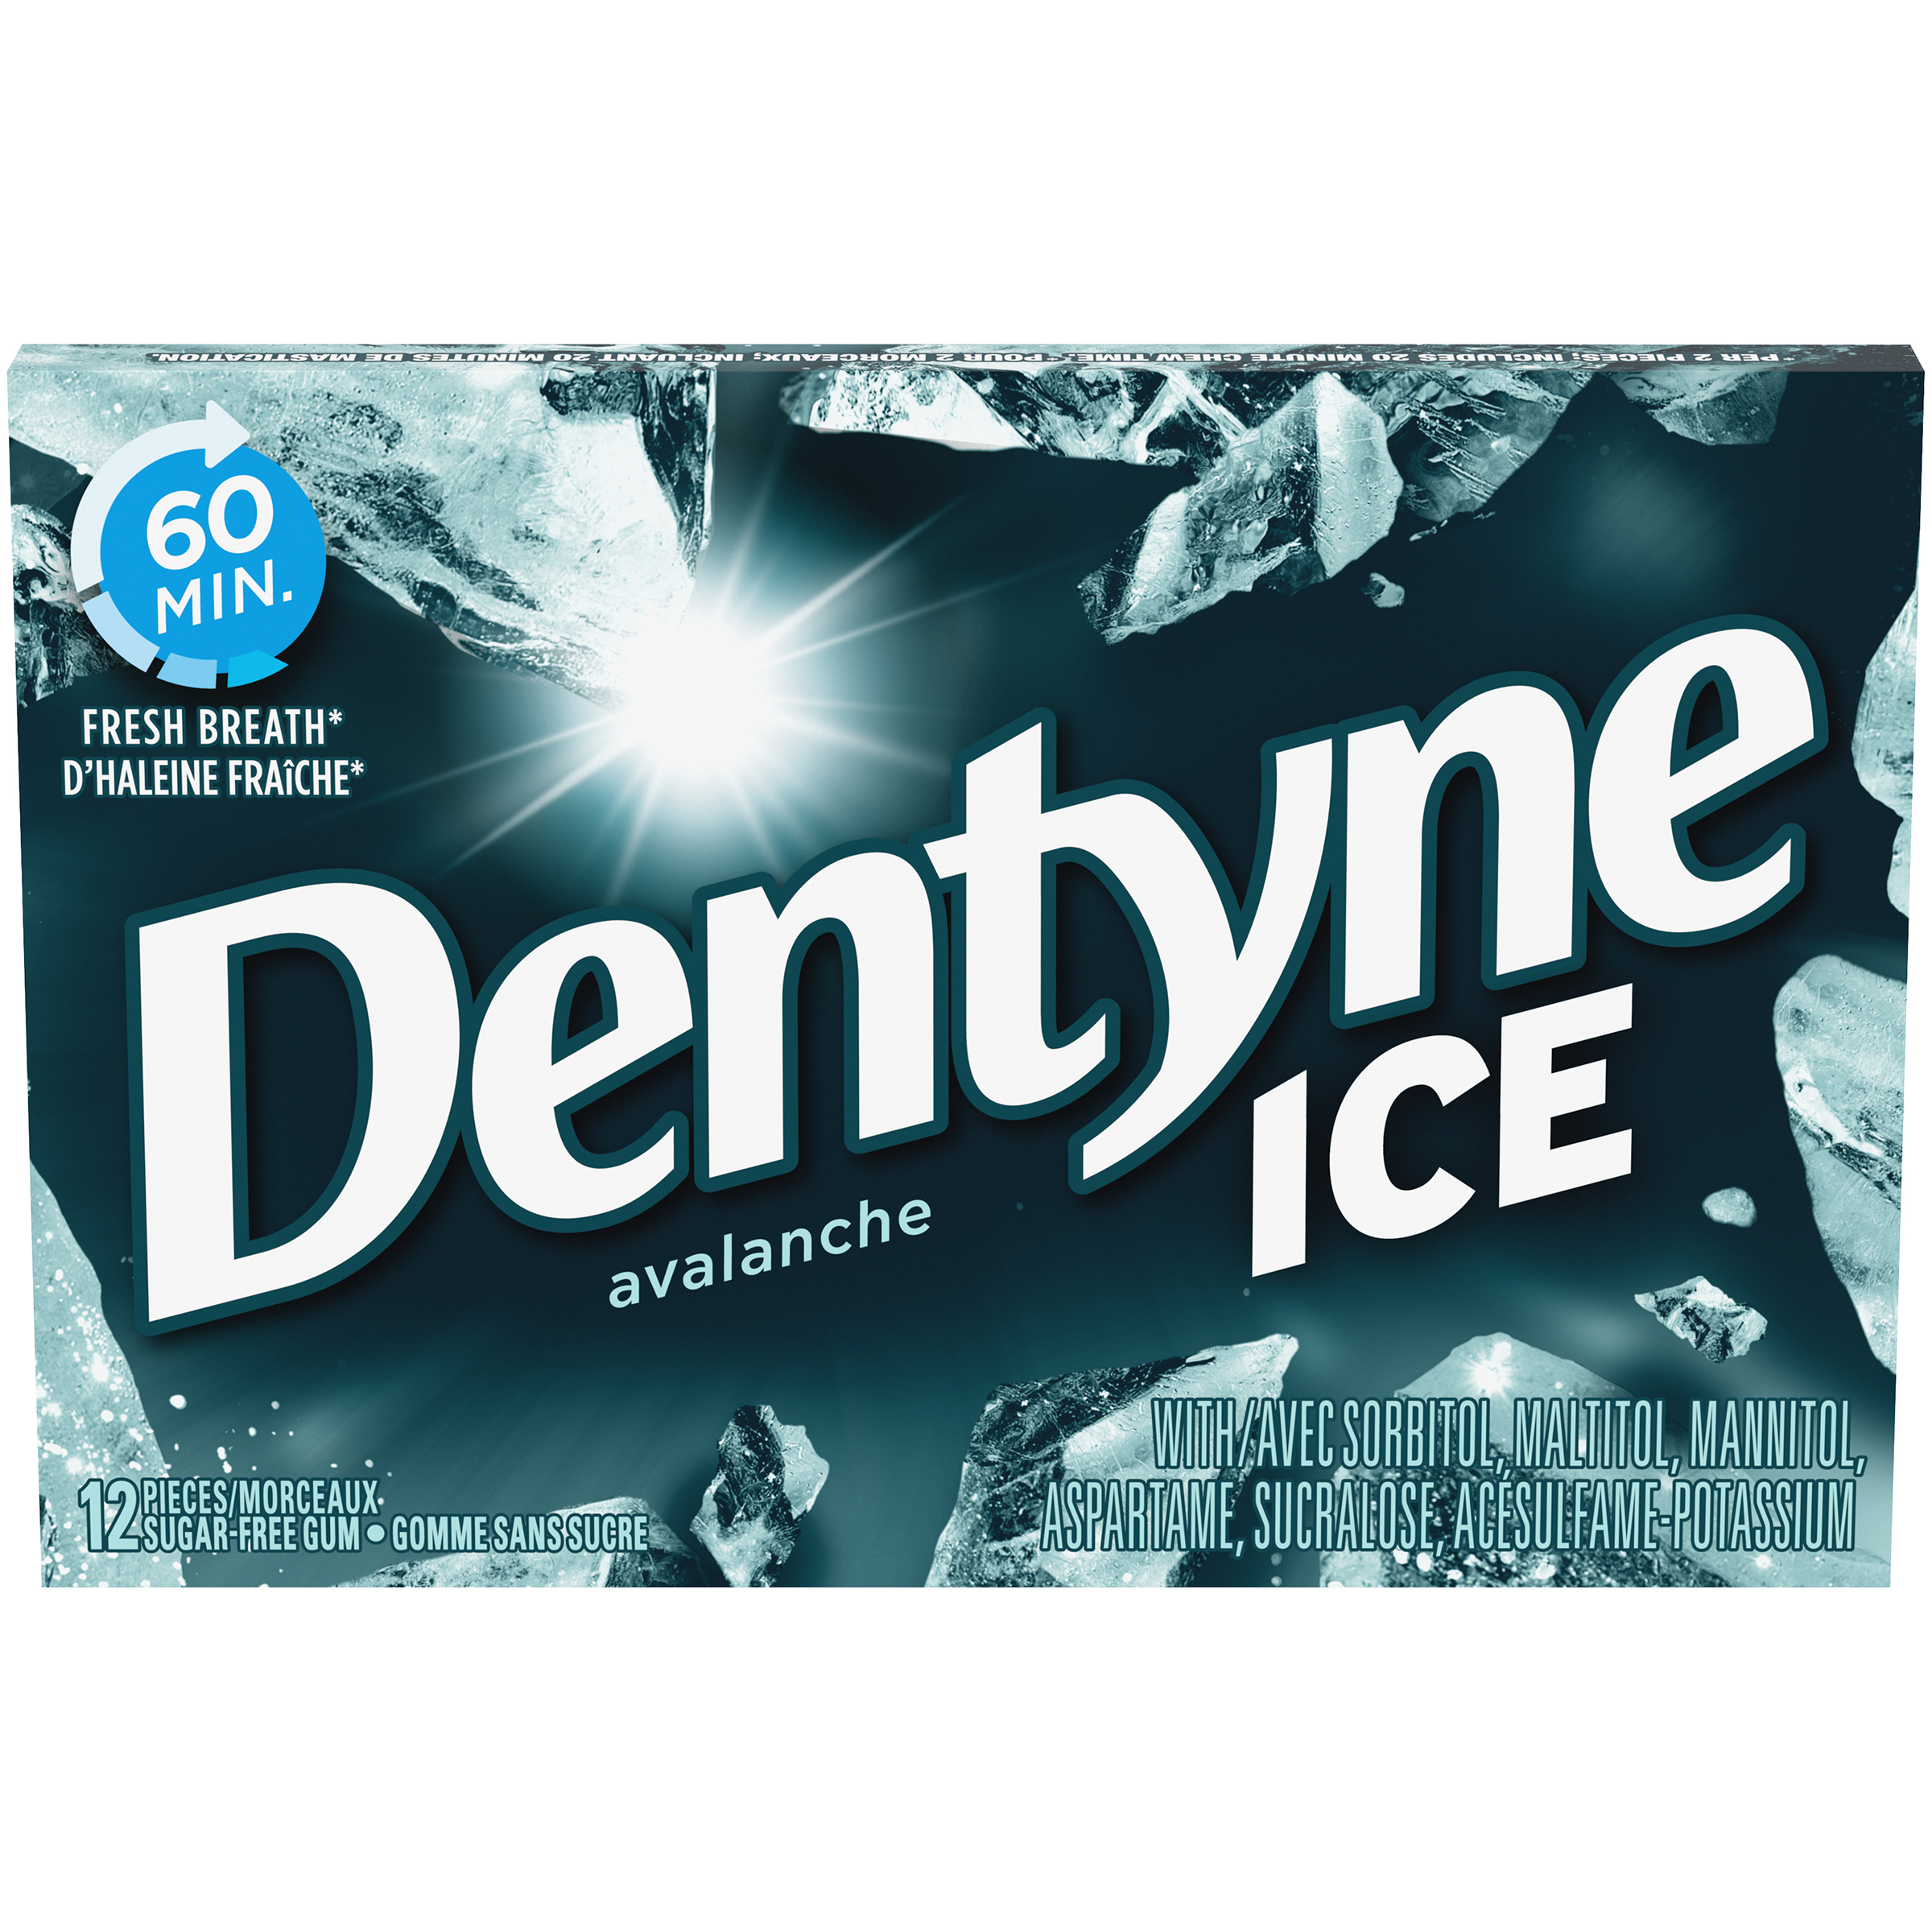 Dentyne Ice Avalanche, Sugar Free Gum, 1 Pack (12 Pieces)-0